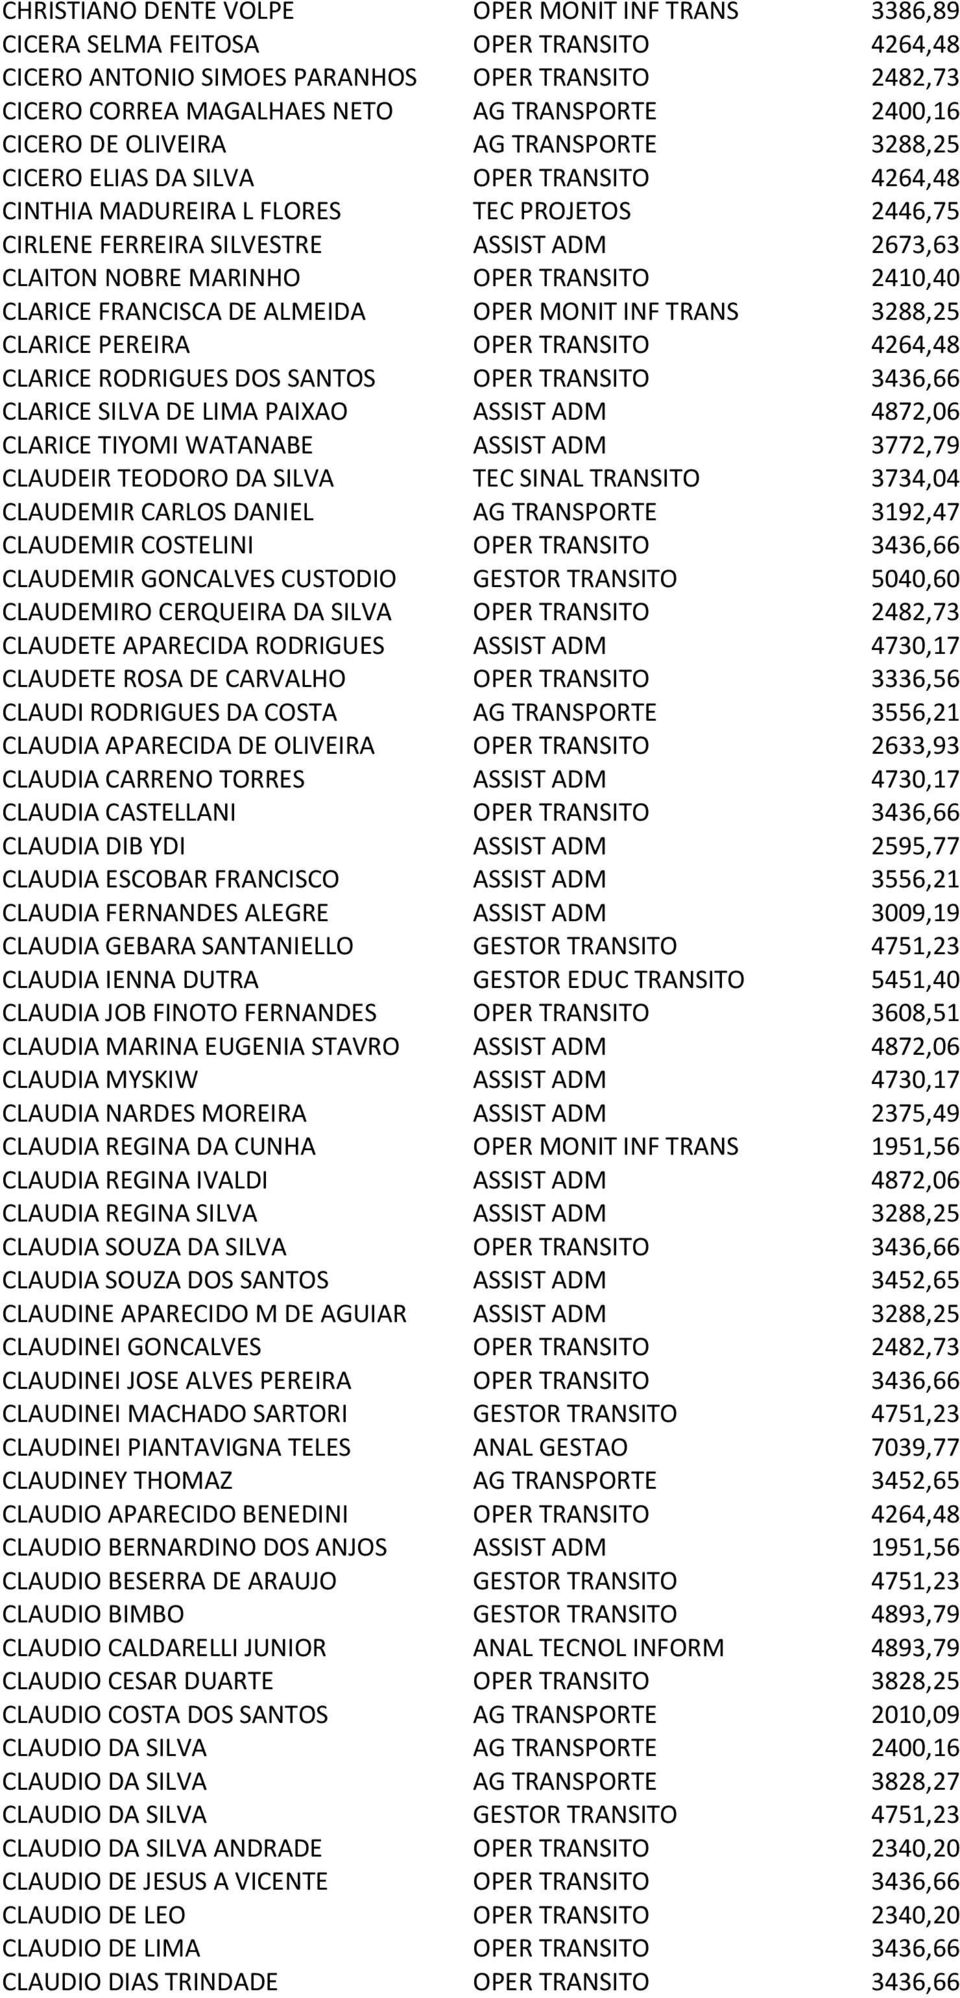 MARINHO OPER TRANSITO 2410,40 CLARICE FRANCISCA DE ALMEIDA OPER MONIT INF TRANS 3288,25 CLARICE PEREIRA OPER TRANSITO 4264,48 CLARICE RODRIGUES DOS SANTOS OPER TRANSITO 3436,66 CLARICE SILVA DE LIMA